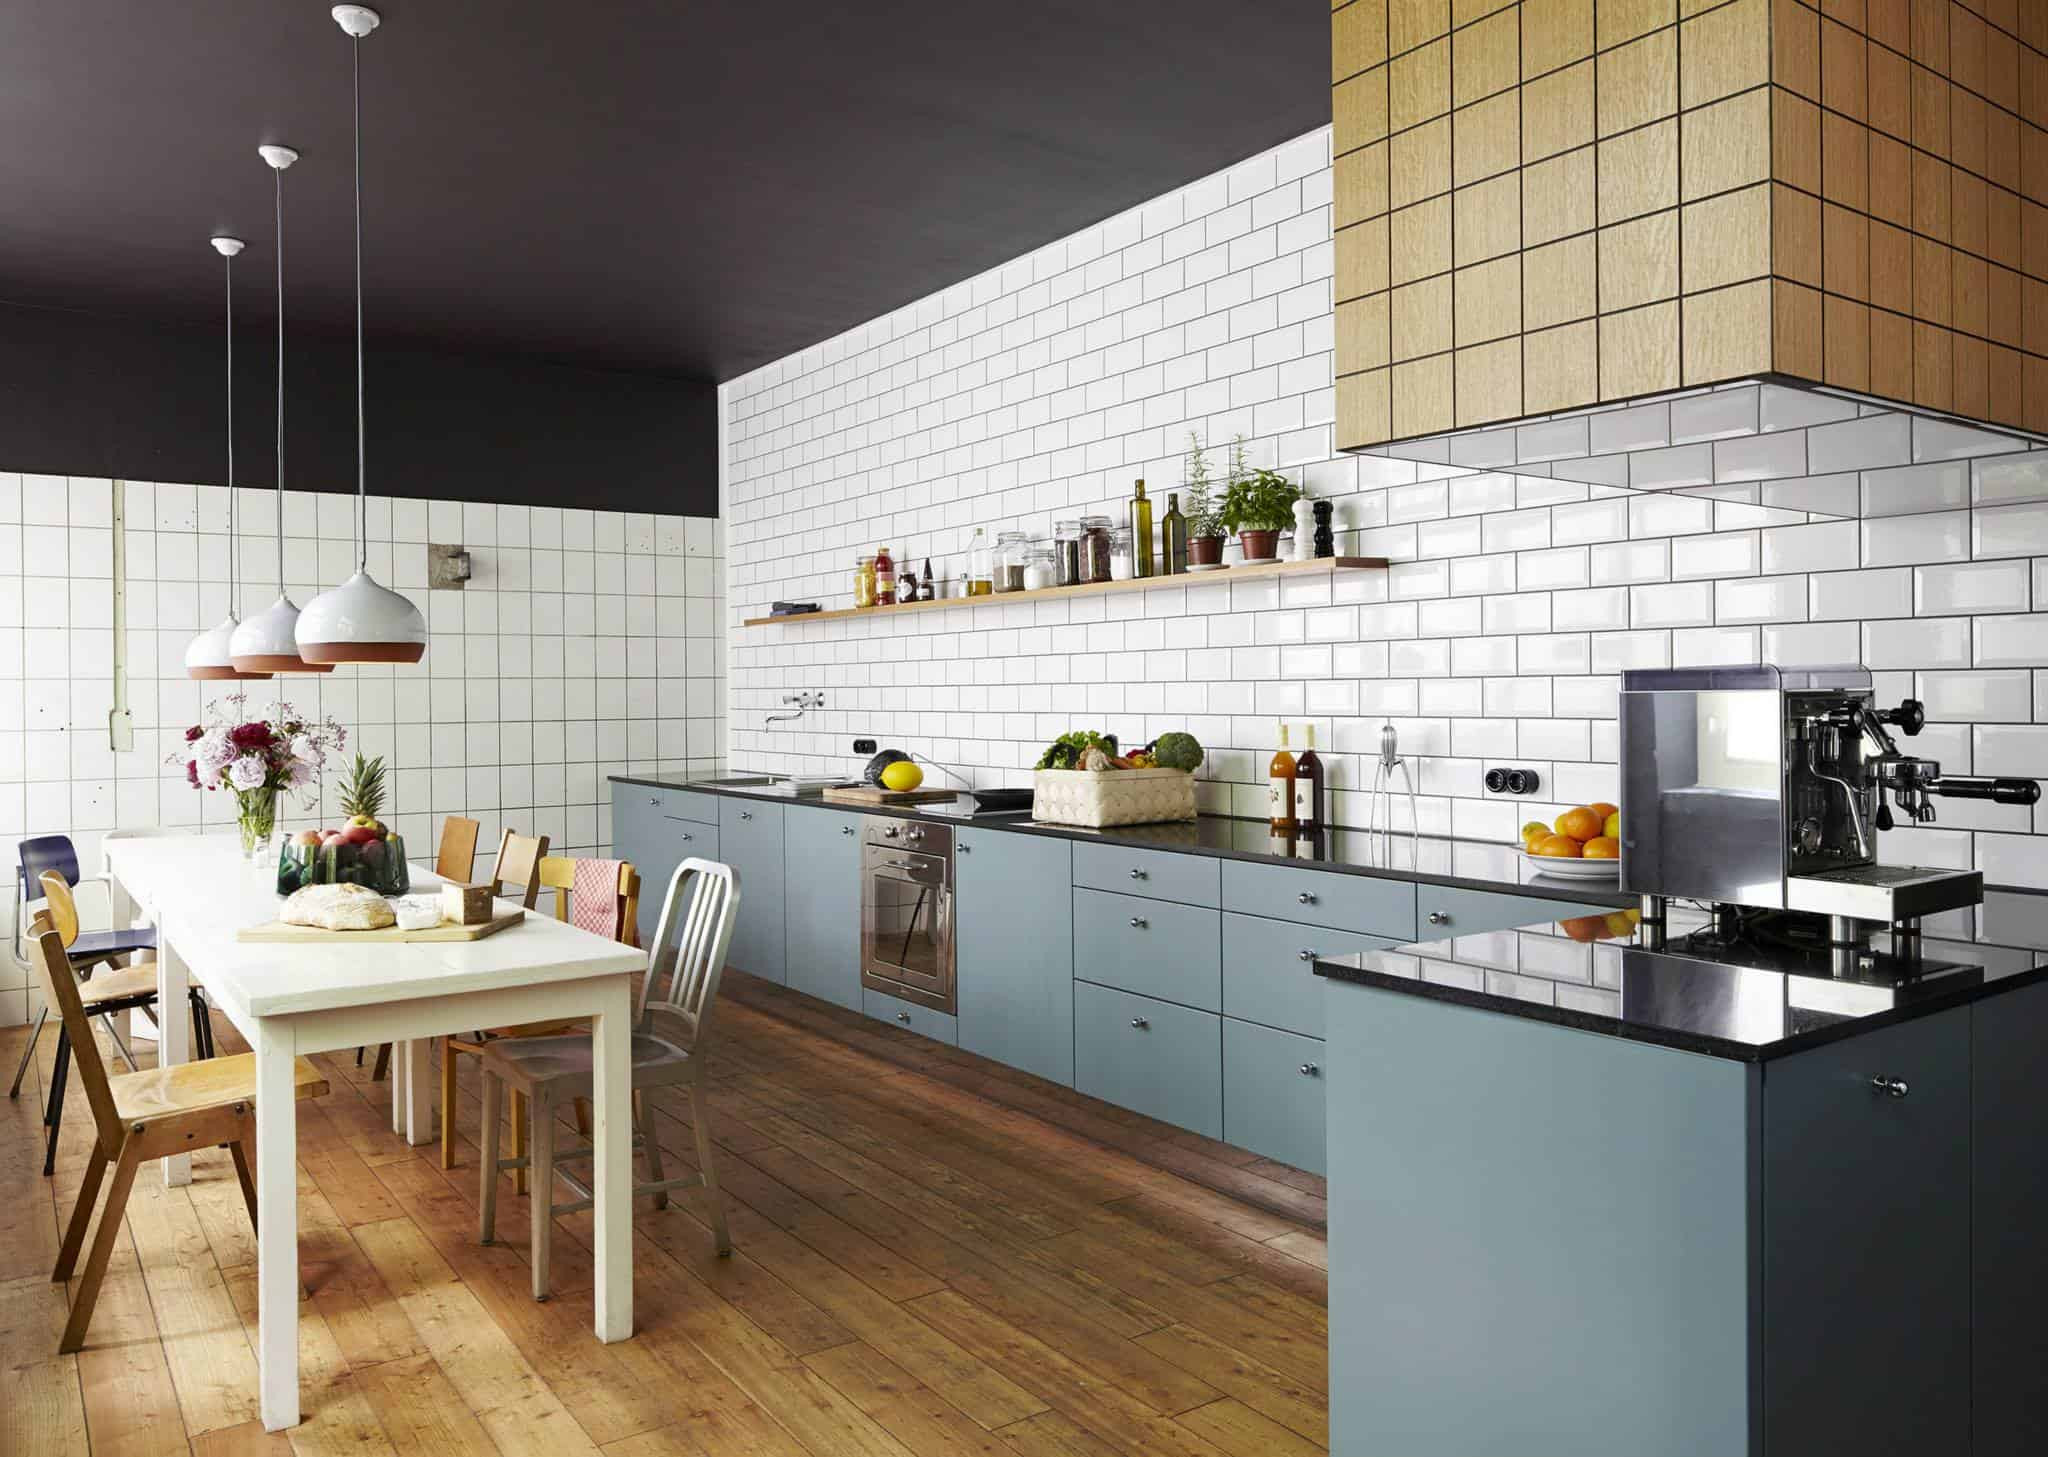 Kitchen Tiles Design
 White Subway Tile Kitchen Designs are Incredibly Universal